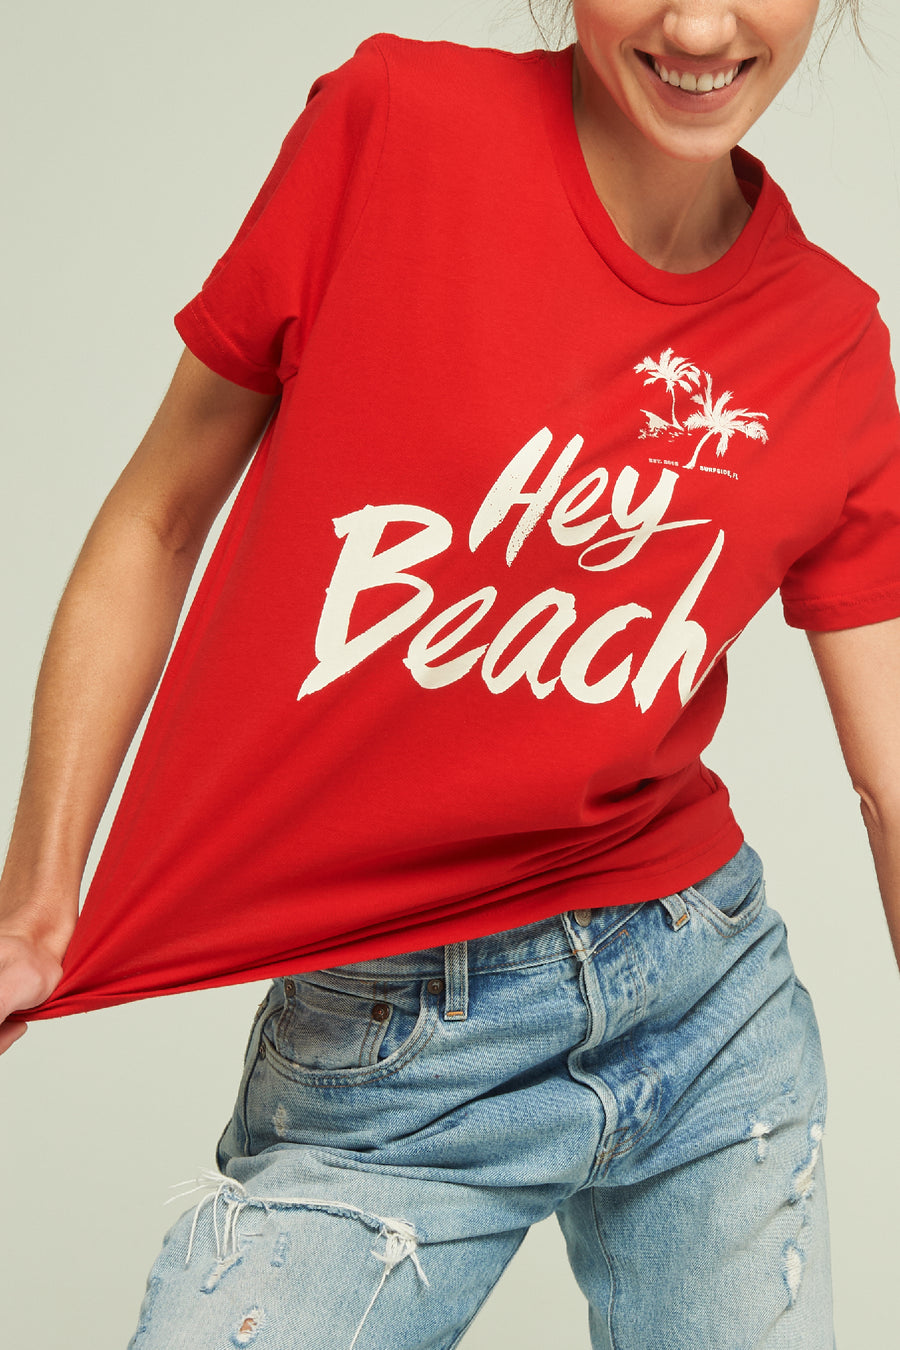 Hey Beach Red Tee - shopsigal